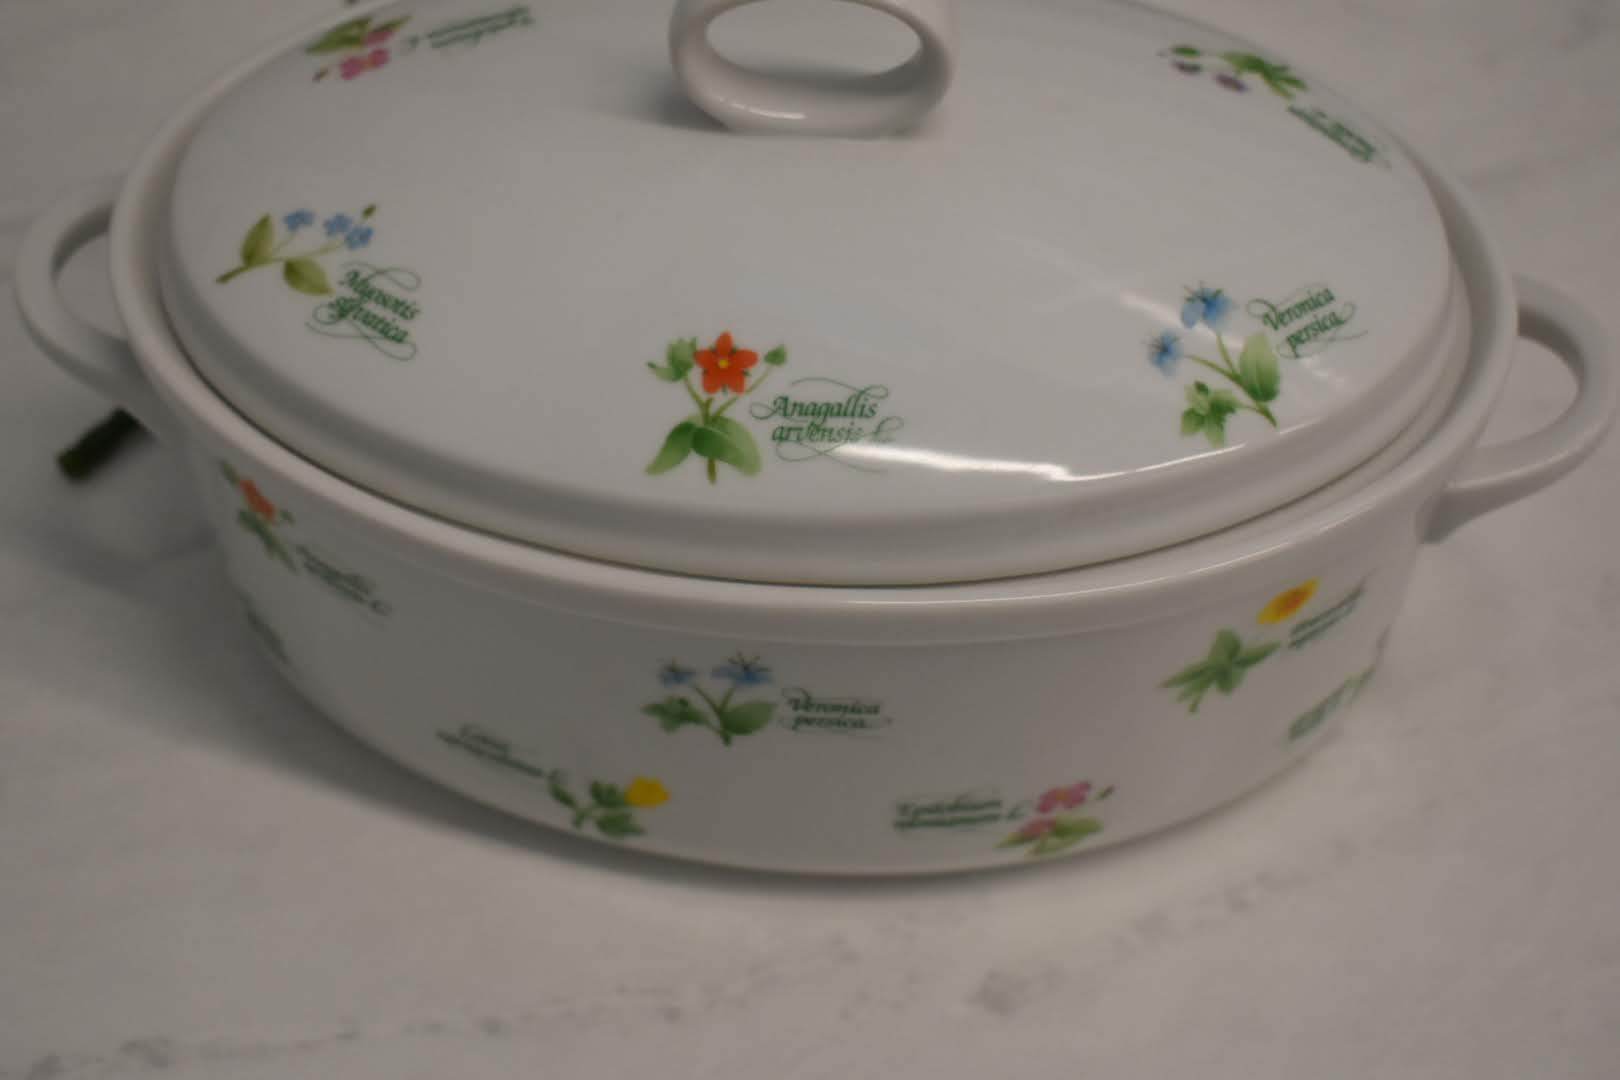 Fine Porcelain China - Botanical Floral Pattern - Oval Casserole Dish / Soufflé Dish with Lid